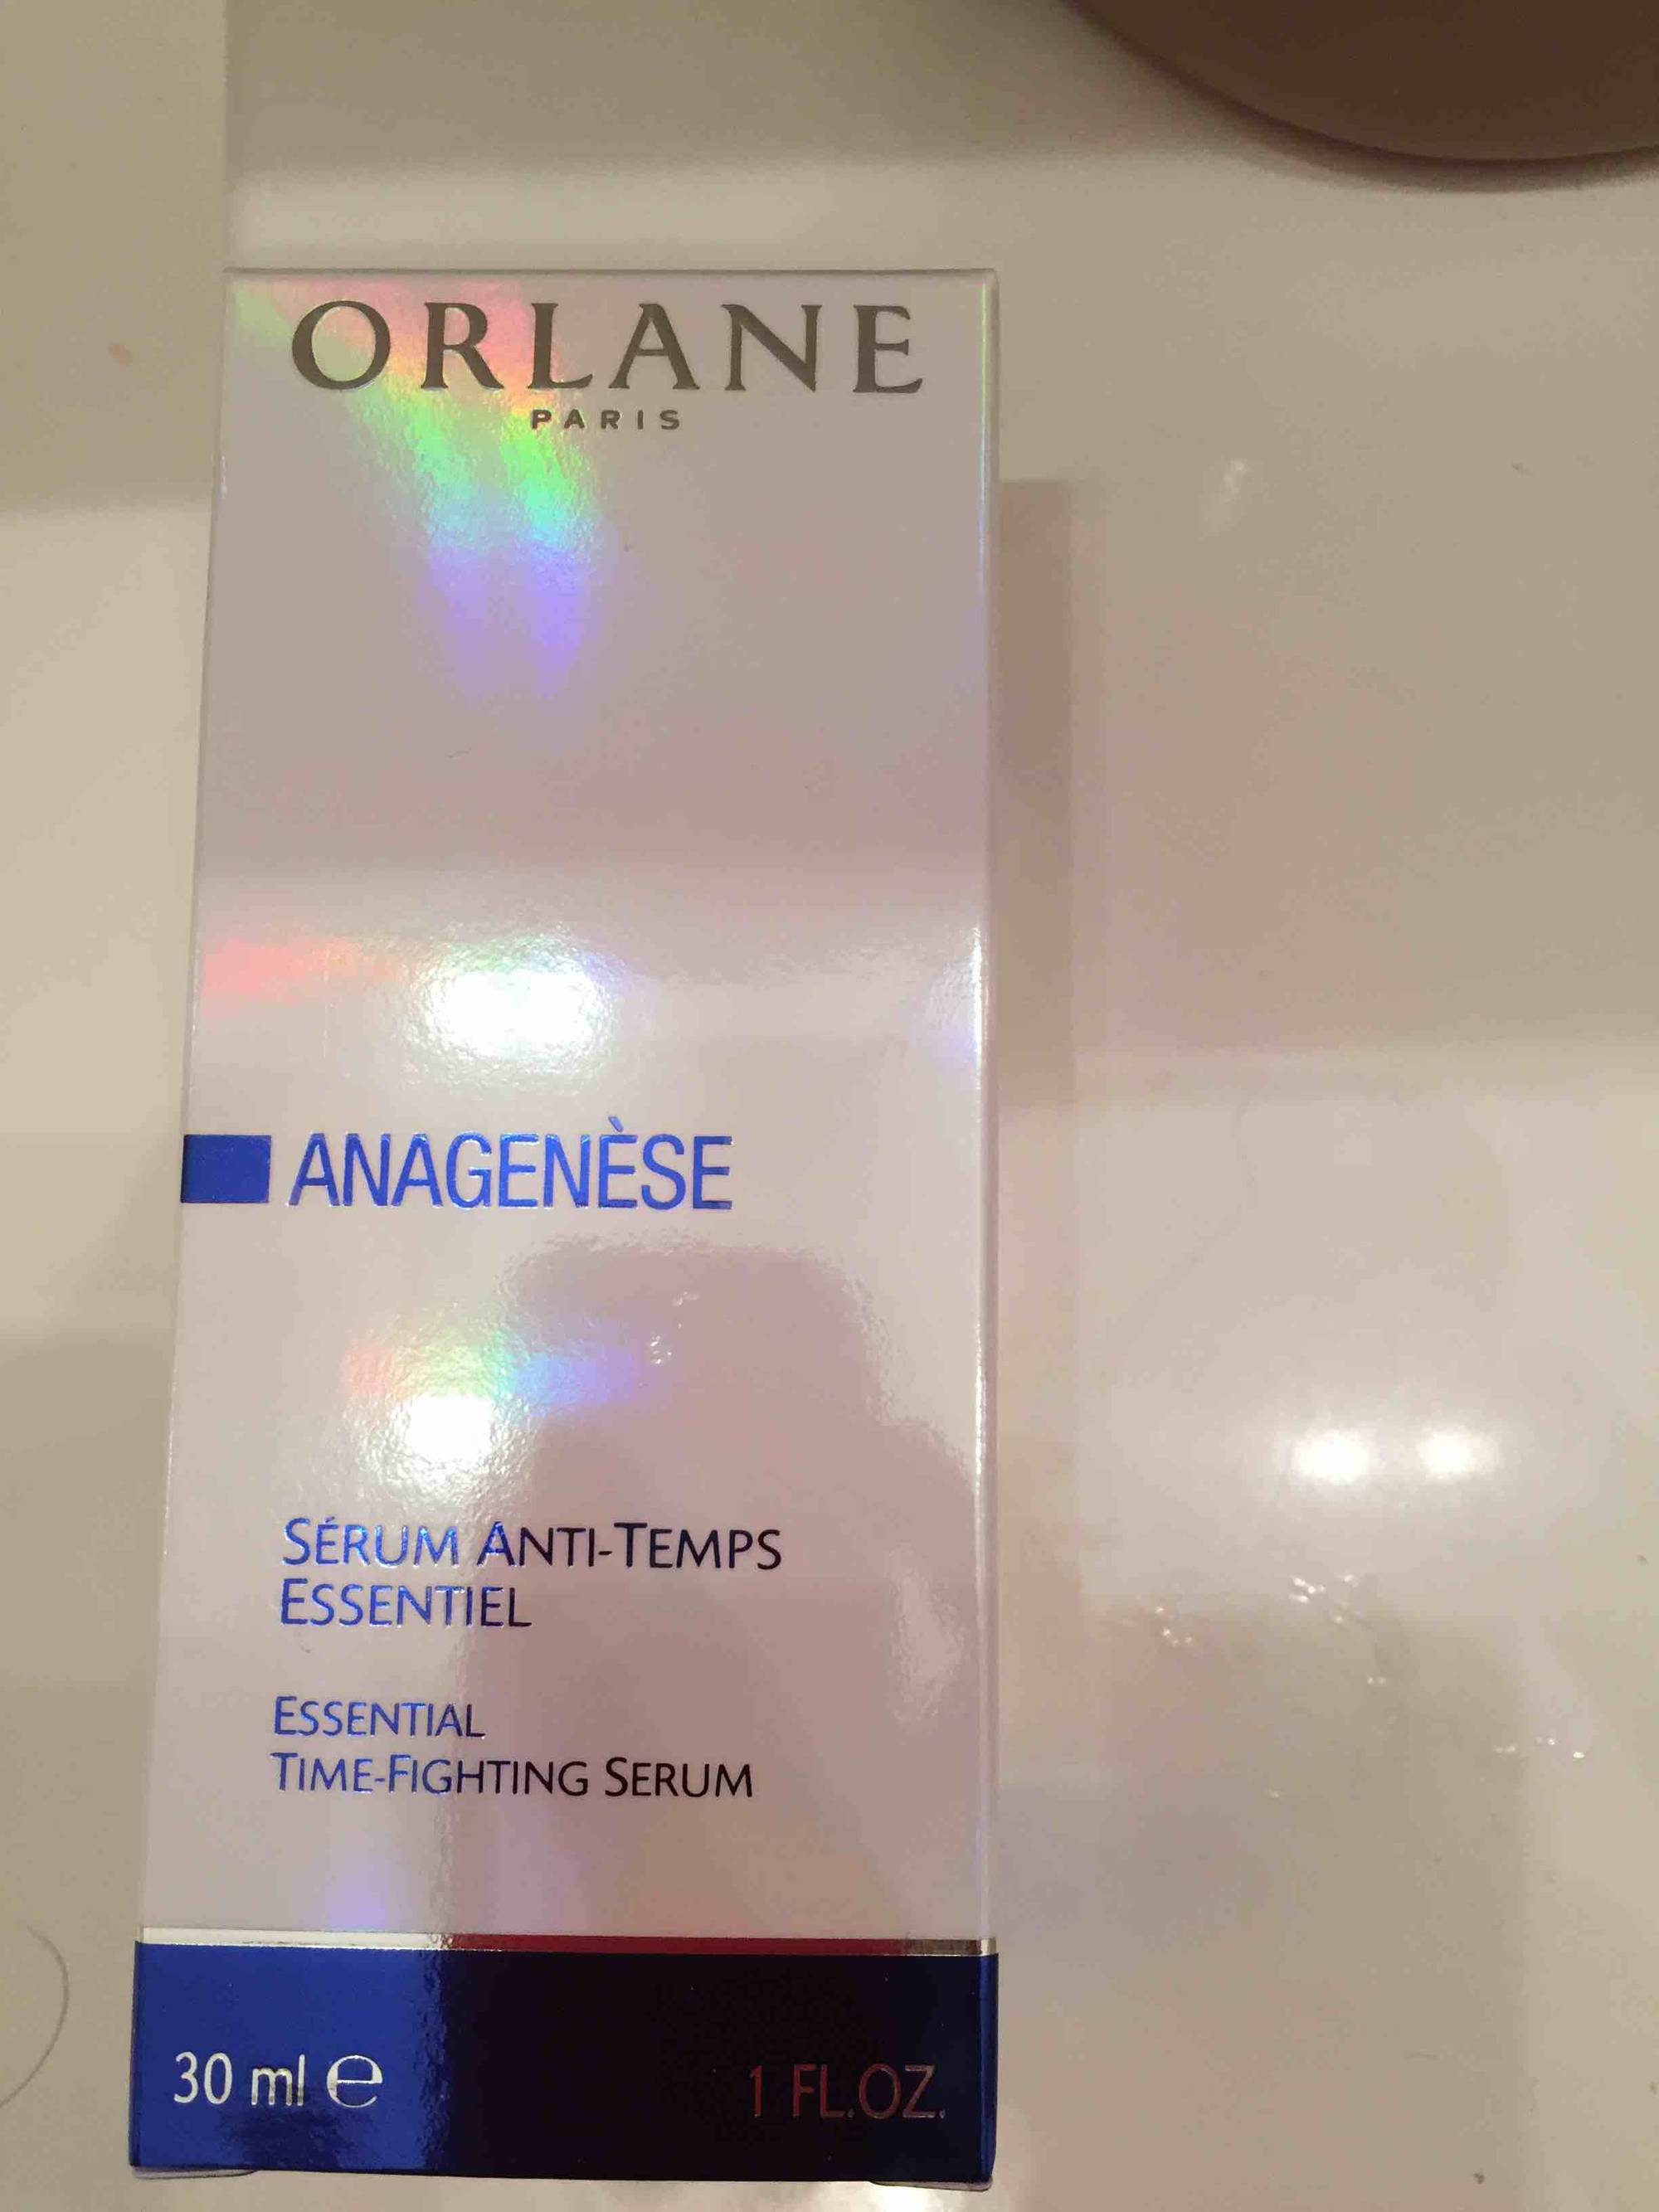 ORLANE - Anagenèse - Sérum anti-temps essentiel 